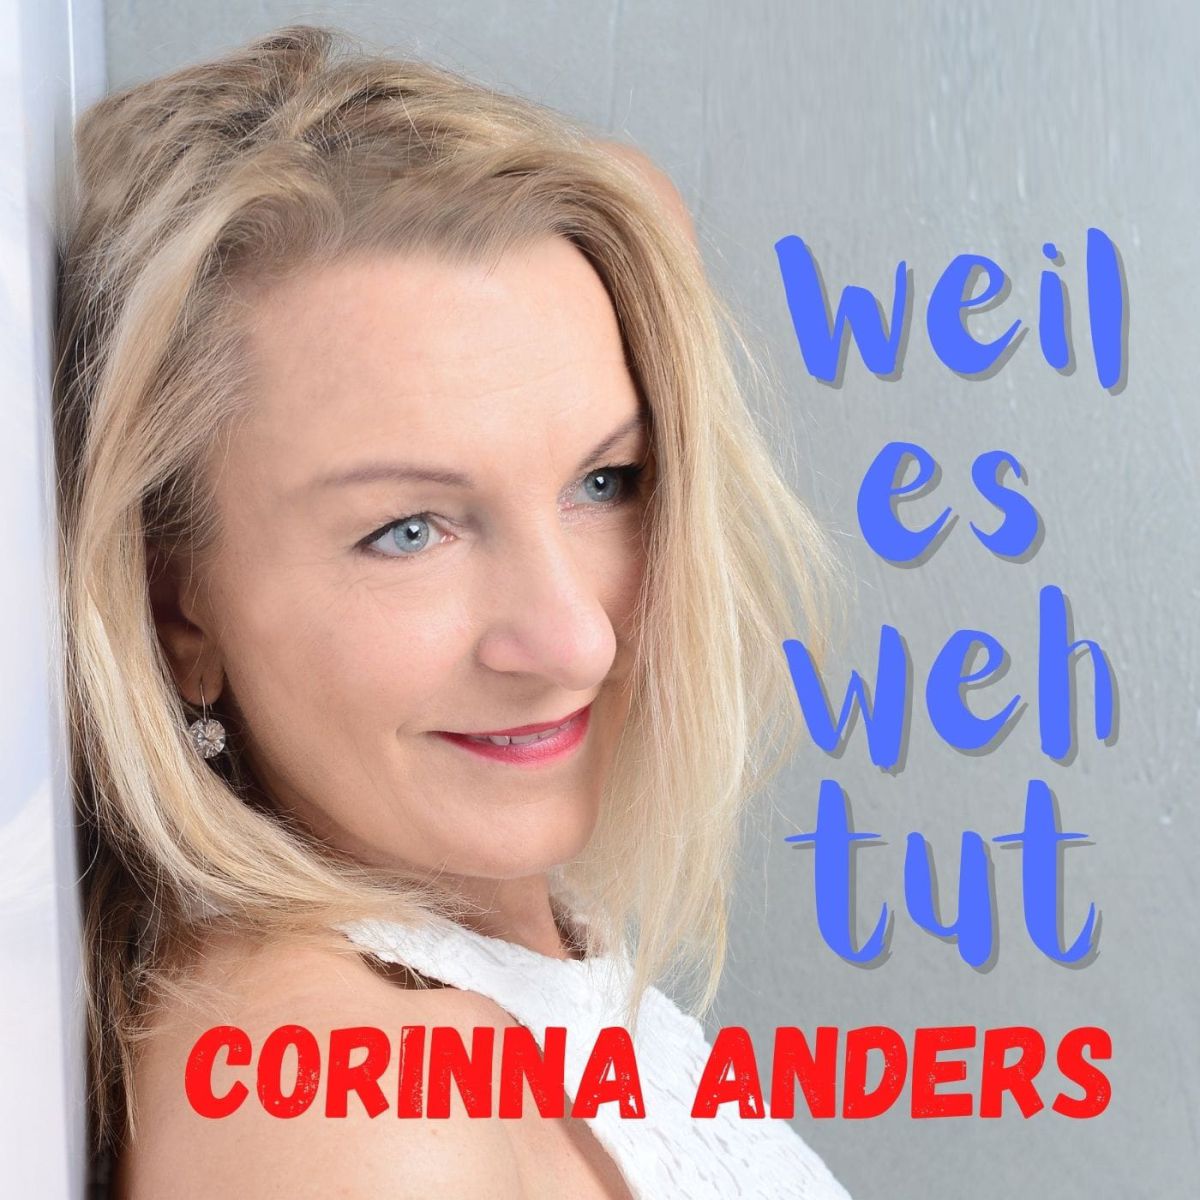 Corinna Anders - Weil es weh tut - Frontcover.jpg